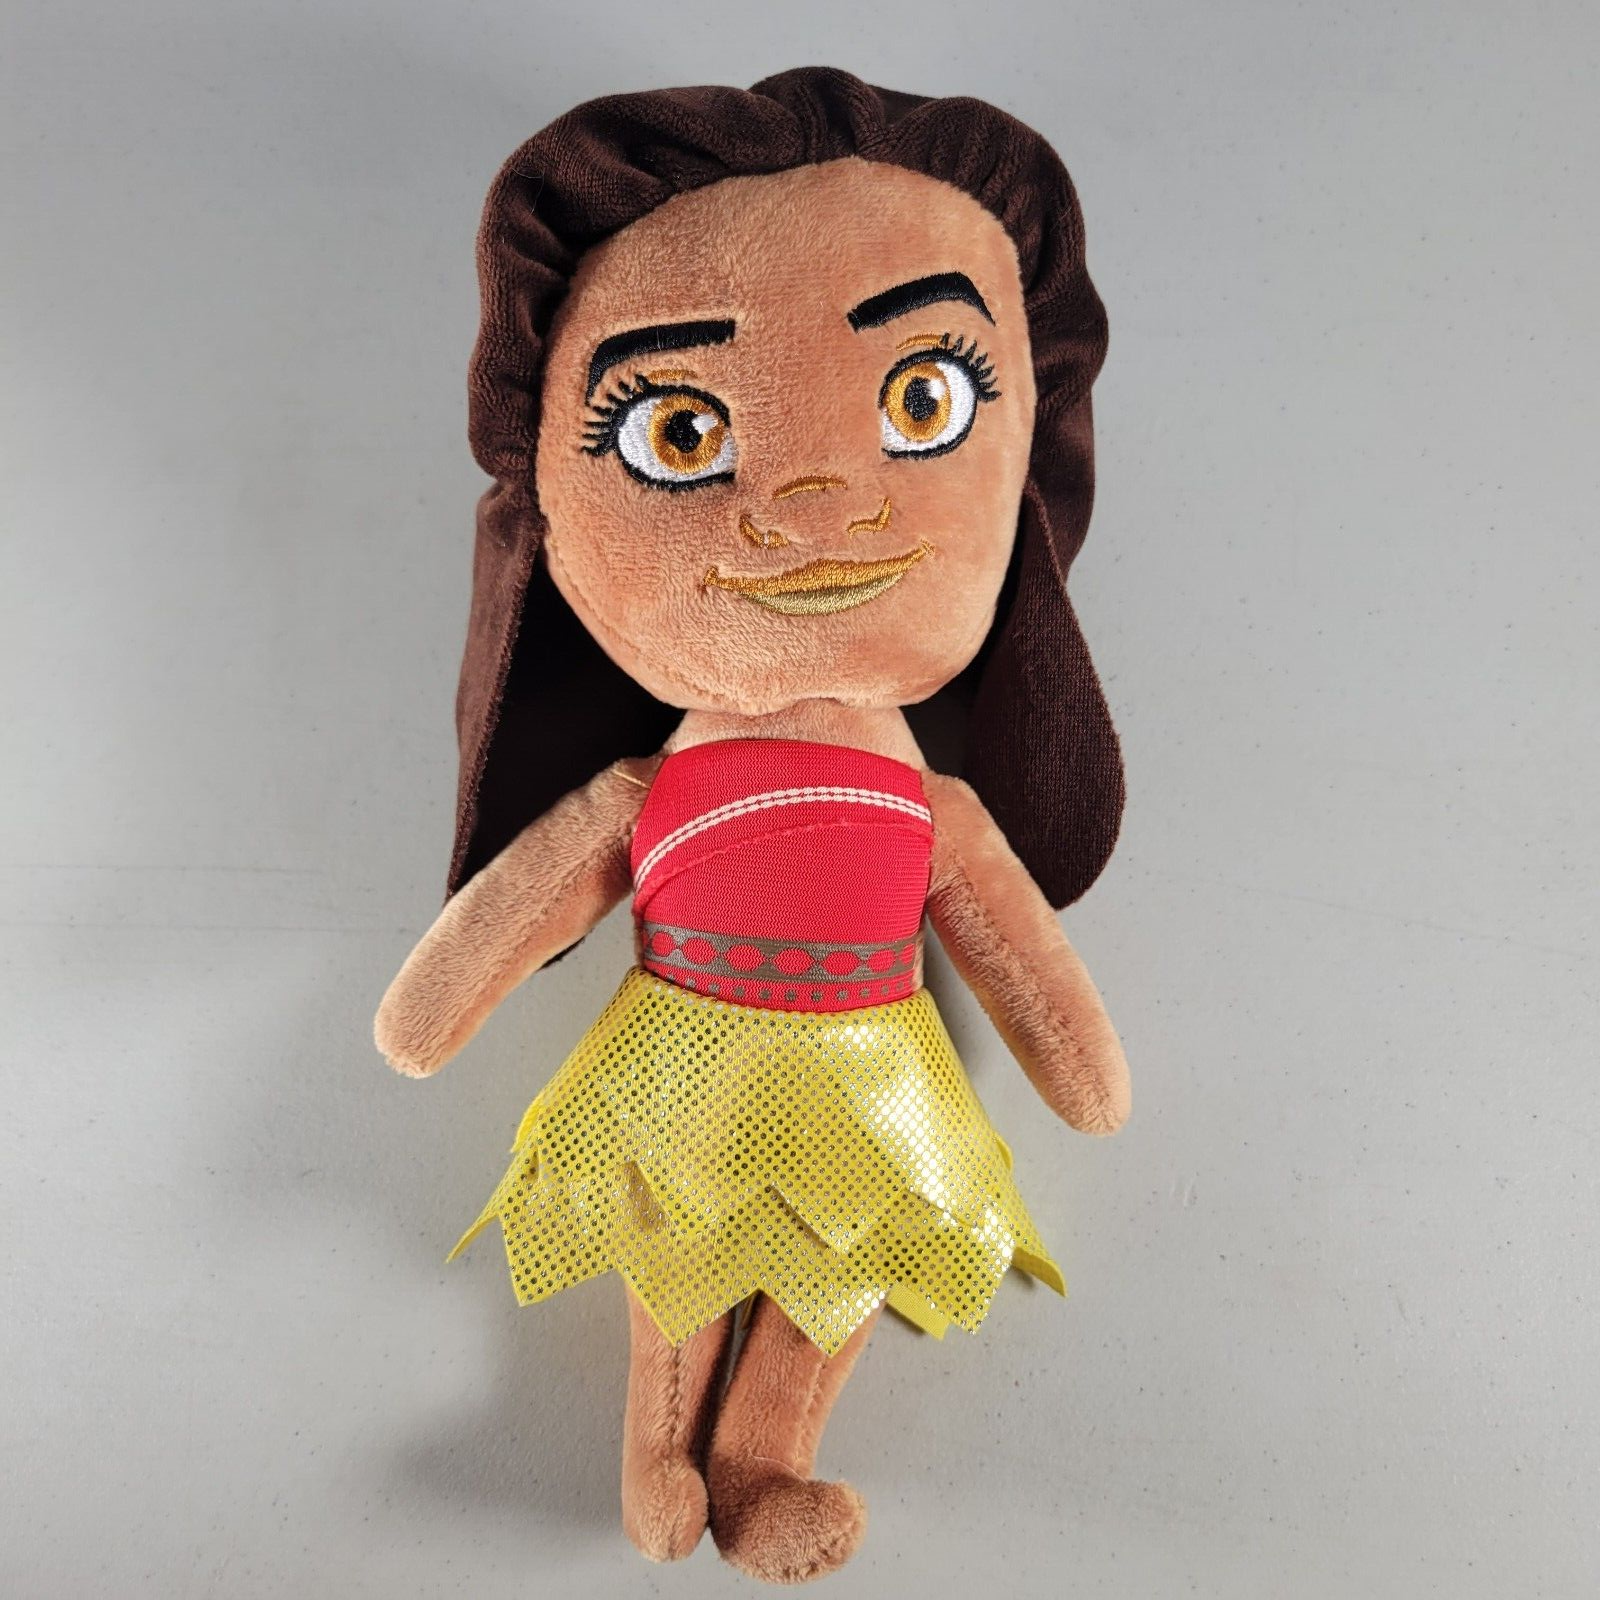 The Disney Store Moana Plush Doll Size 9" Tall - $10.98